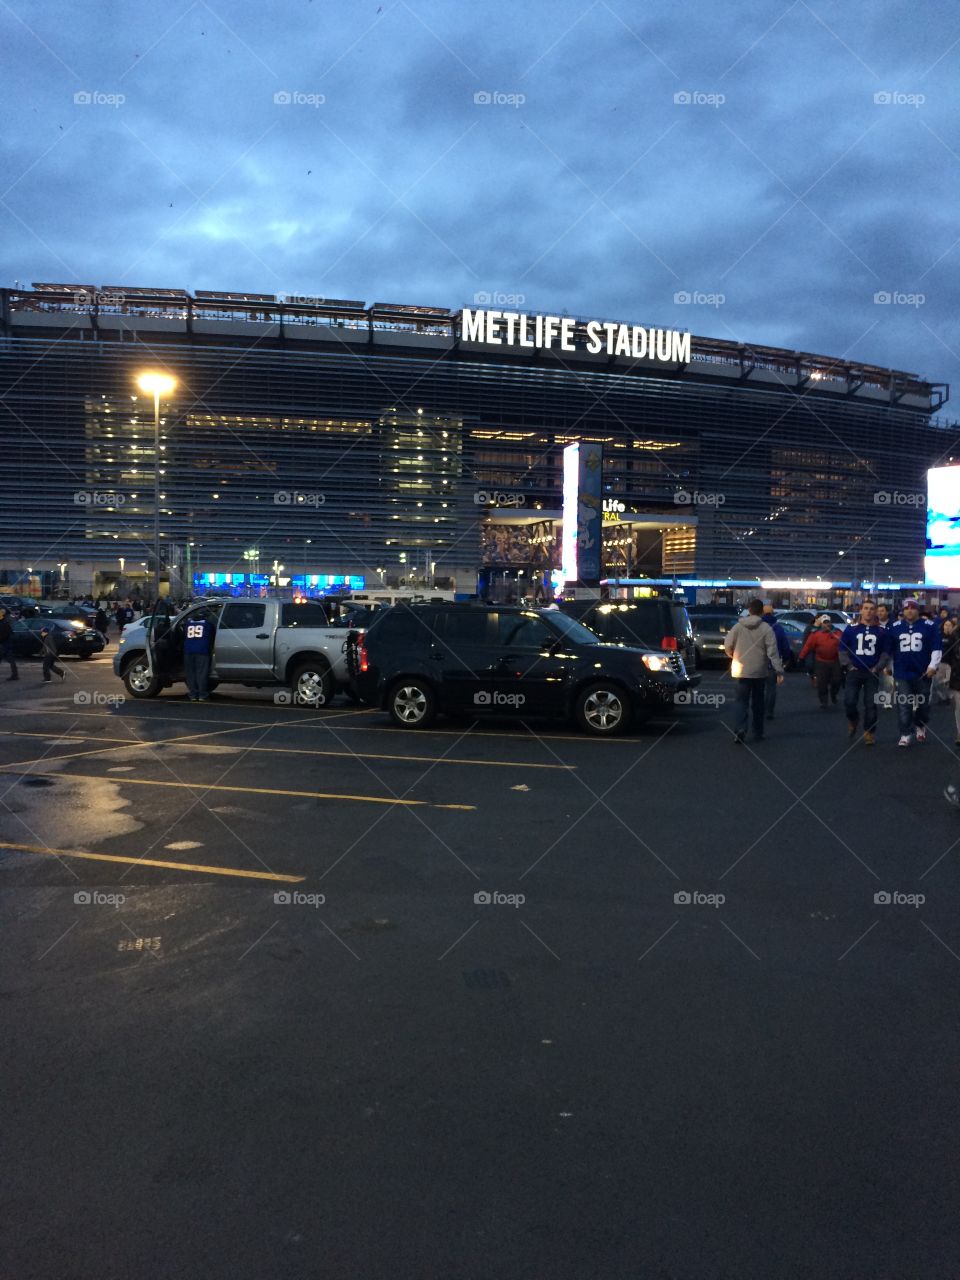 MetLife Stadium. New York Giants.